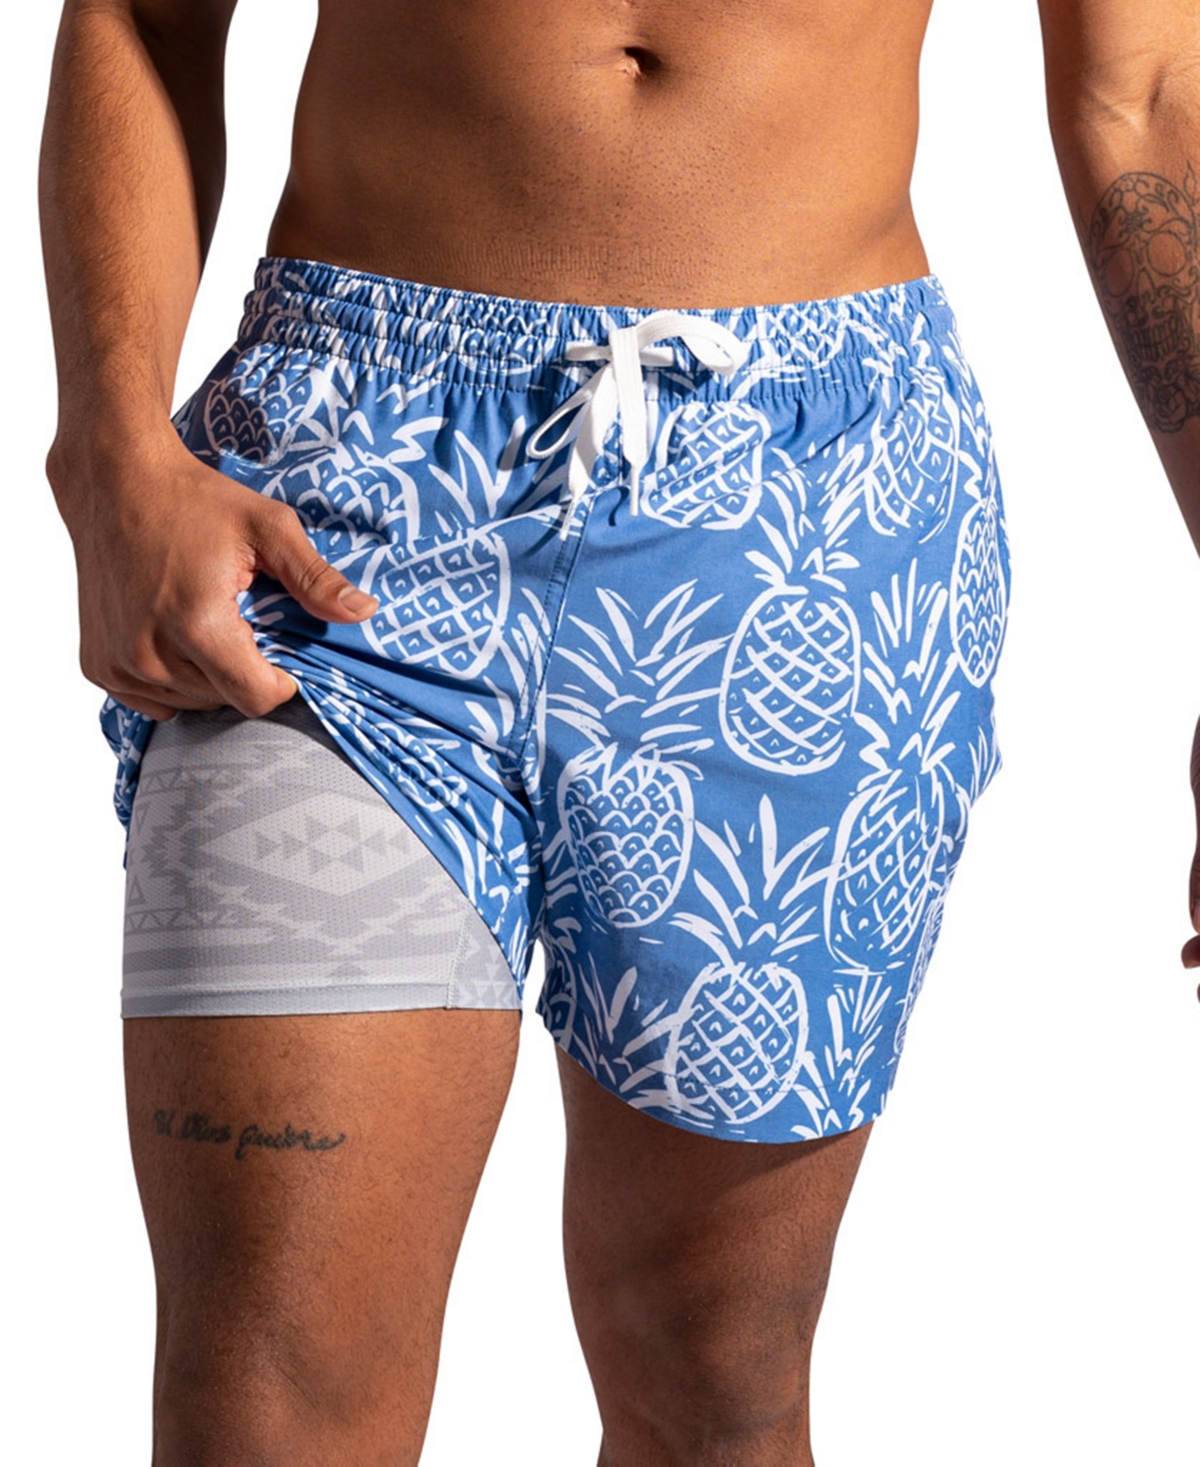 Men's The Thigh-Naples Quick-Dry 5-1/2" Swim Trunks with Boxer Brief Liner - Medium Blue